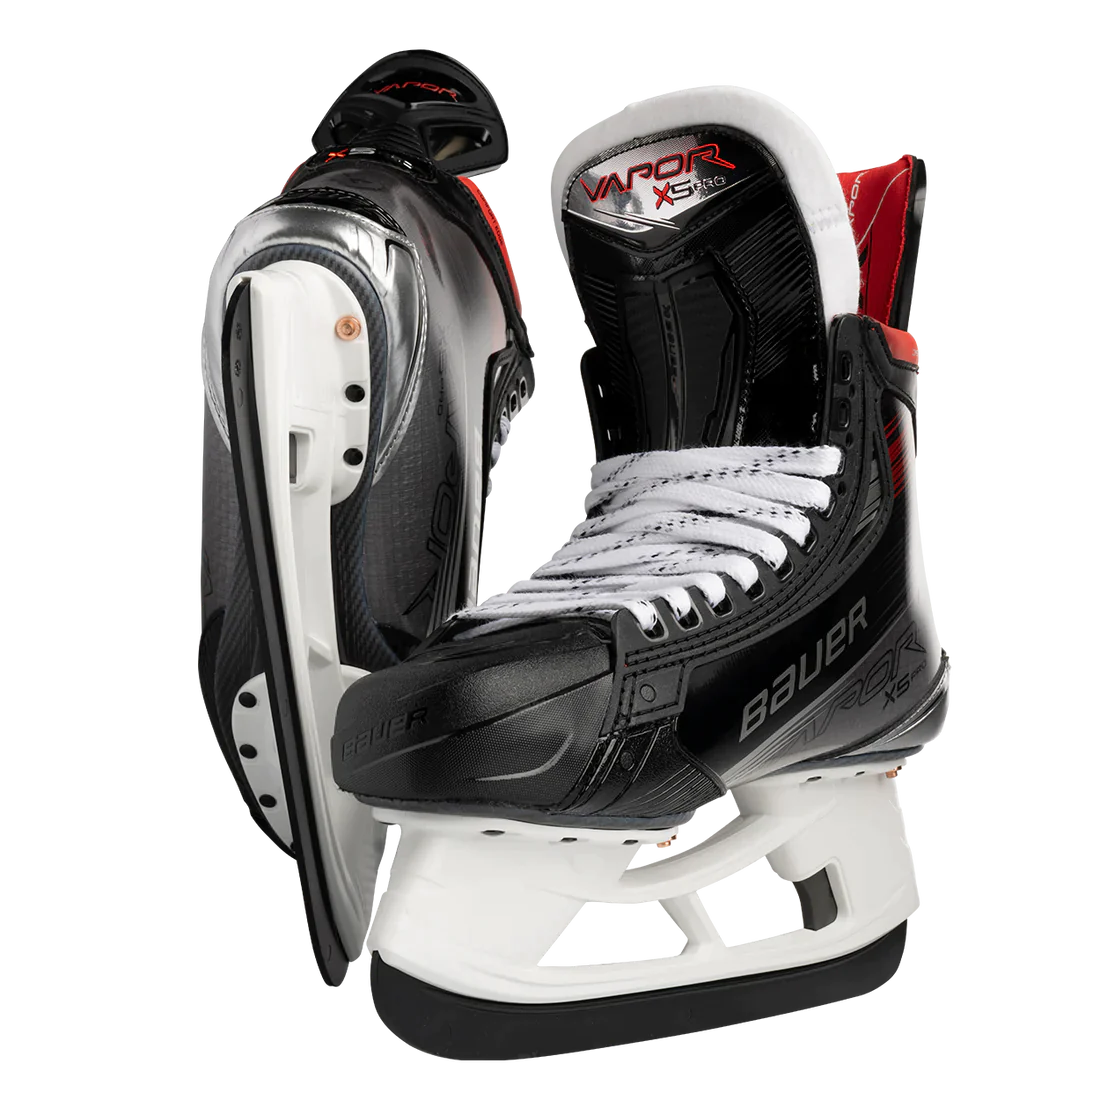 Bauer Vapor X5 Pro Ice Hockey Skate Intermediate